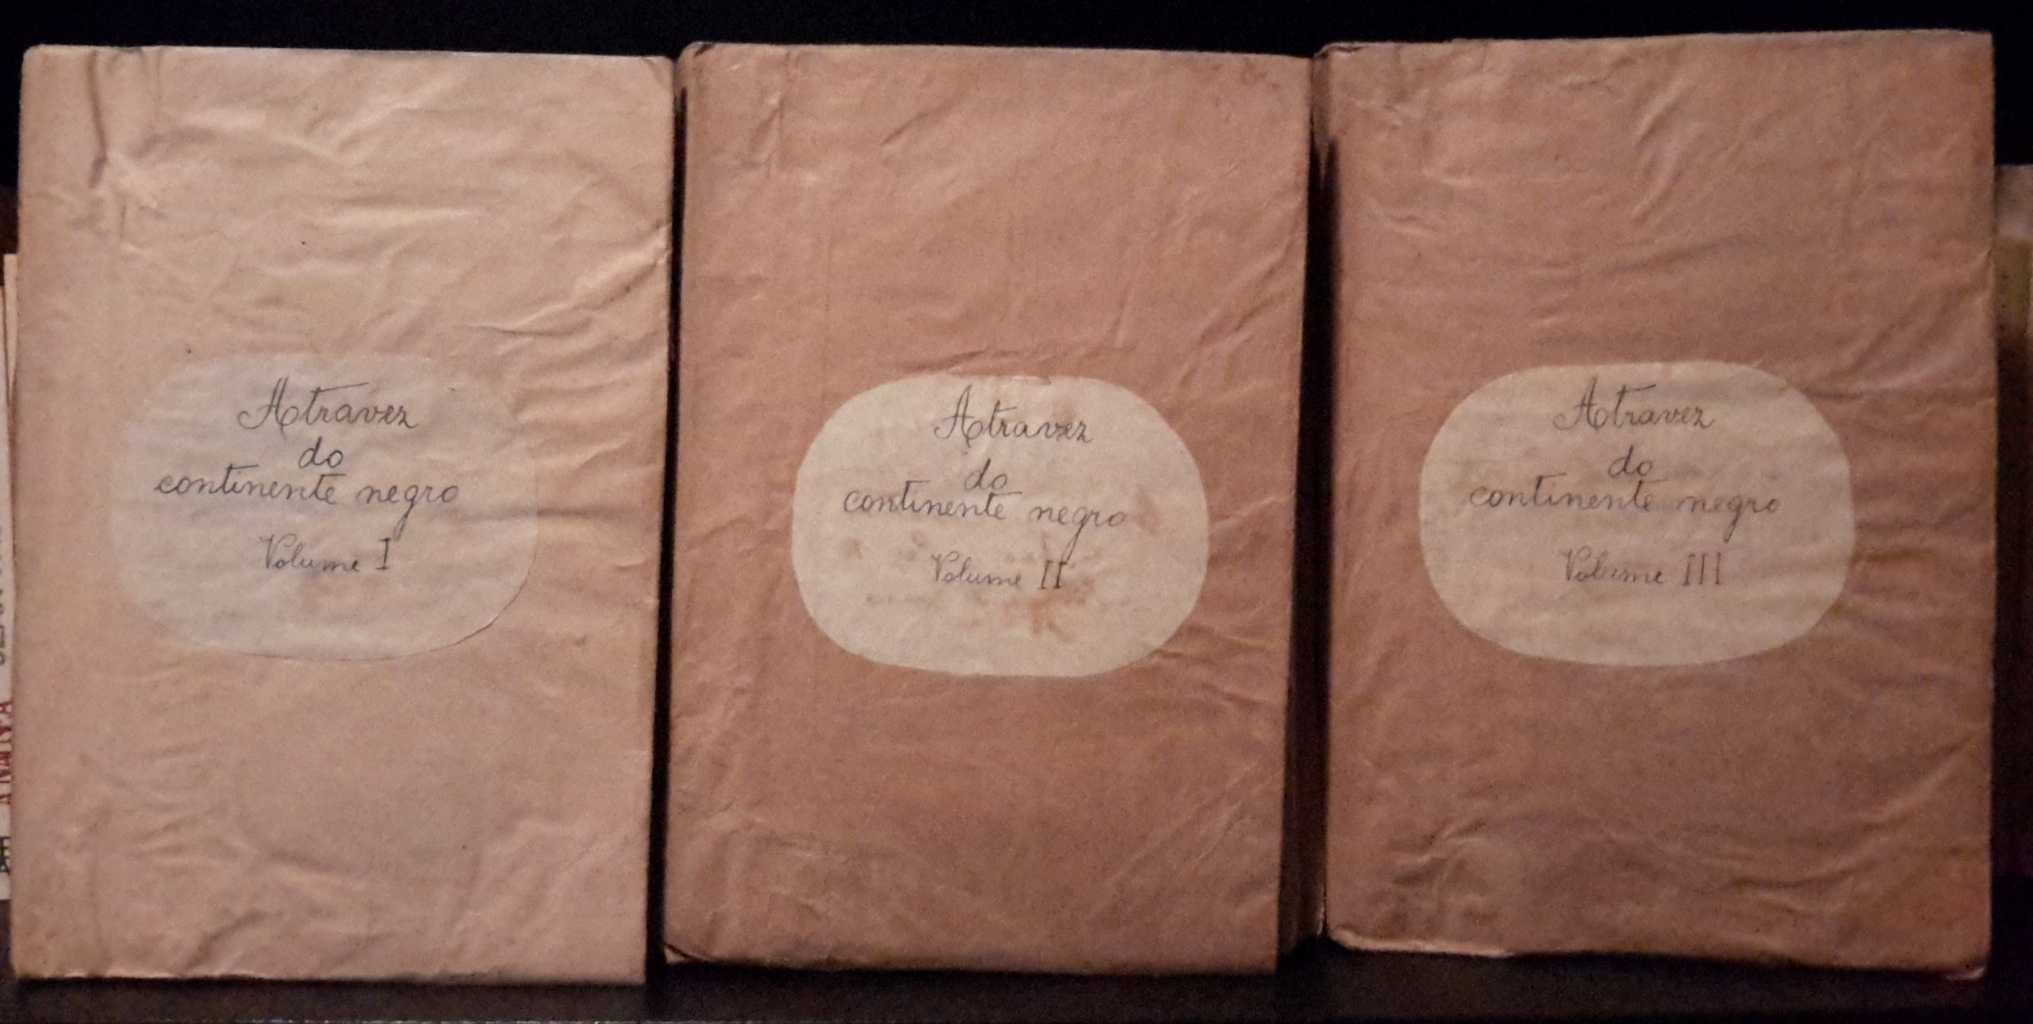 Henrique M. Stanley - Atravez do Continente Negro (3 volumes, 1880)